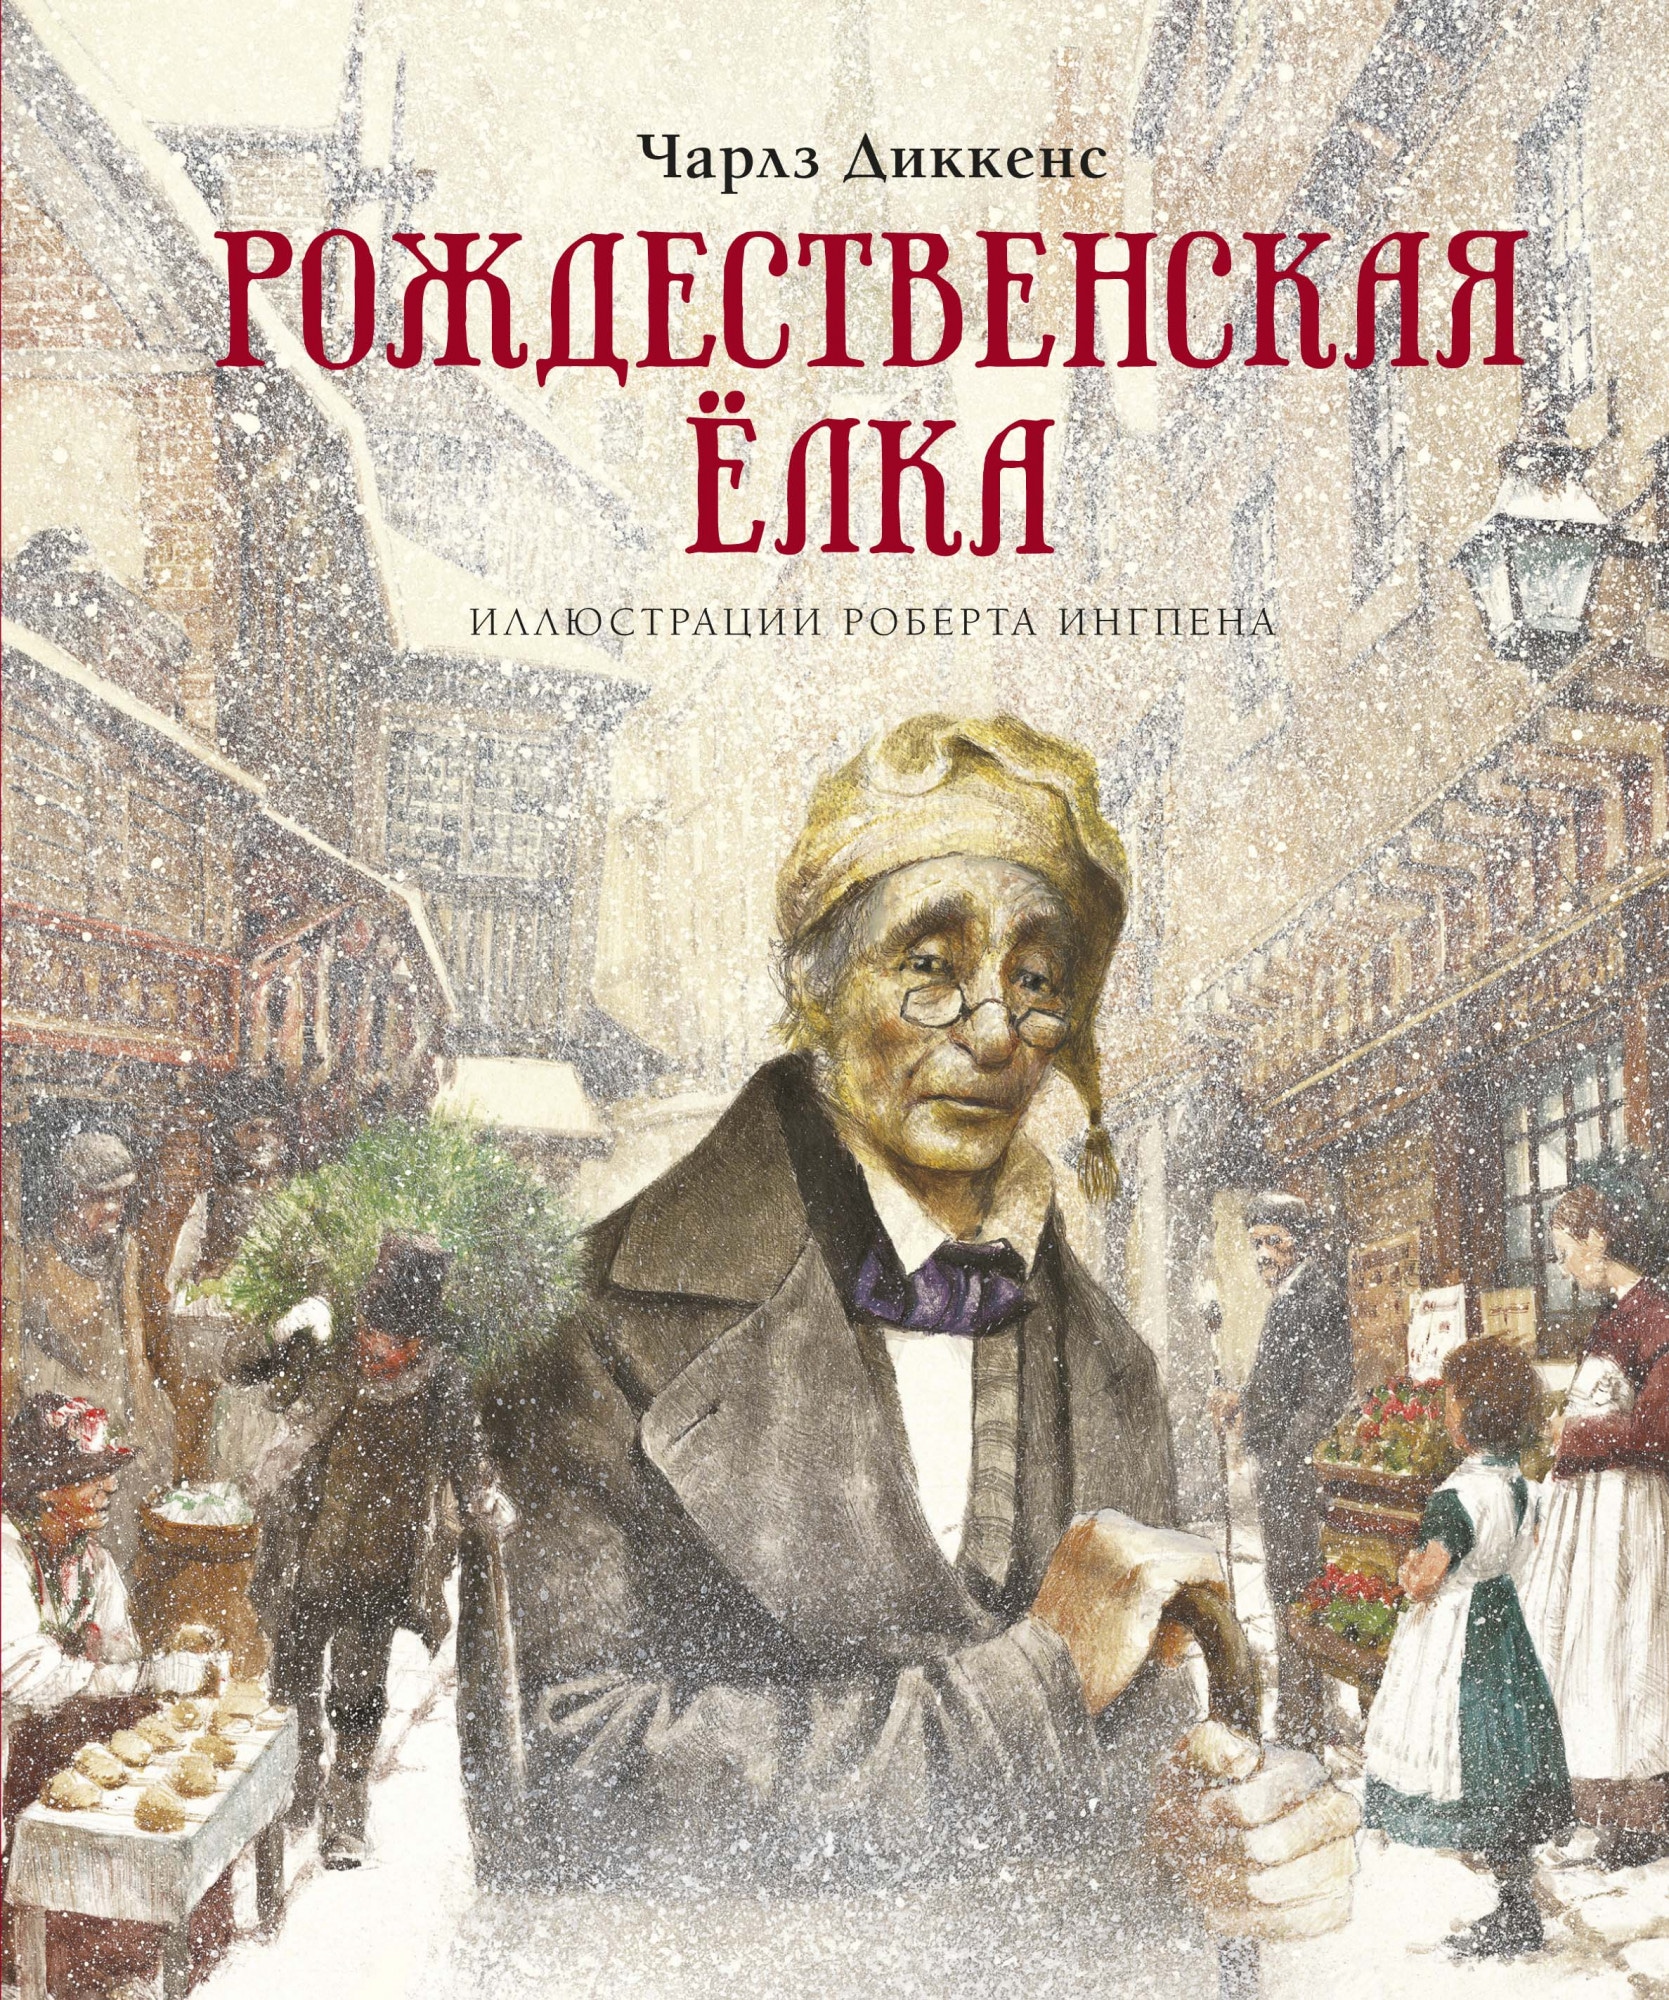 Book “Рождественская ёлка” by Чарльз Диккенс — 2021